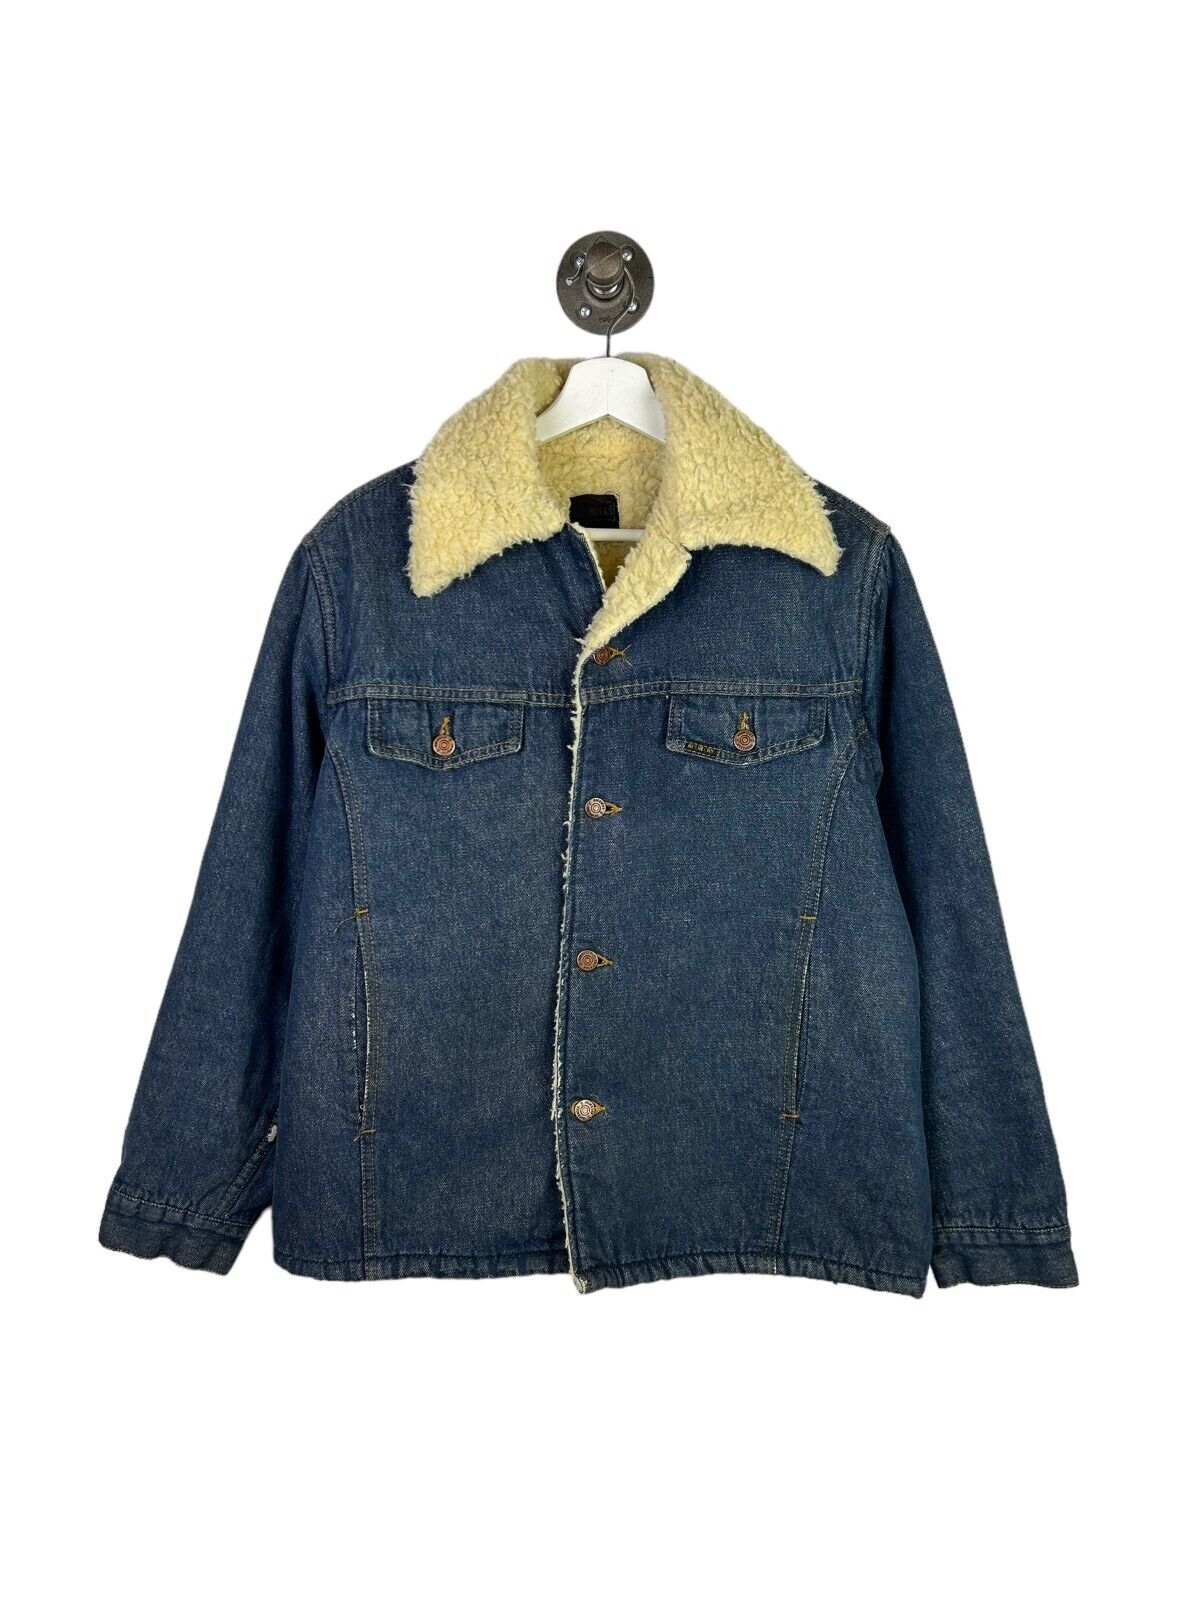 Vintage 50s/60s Sears & Roebucks Sherpa Lined Denim Work Jacket Size Large